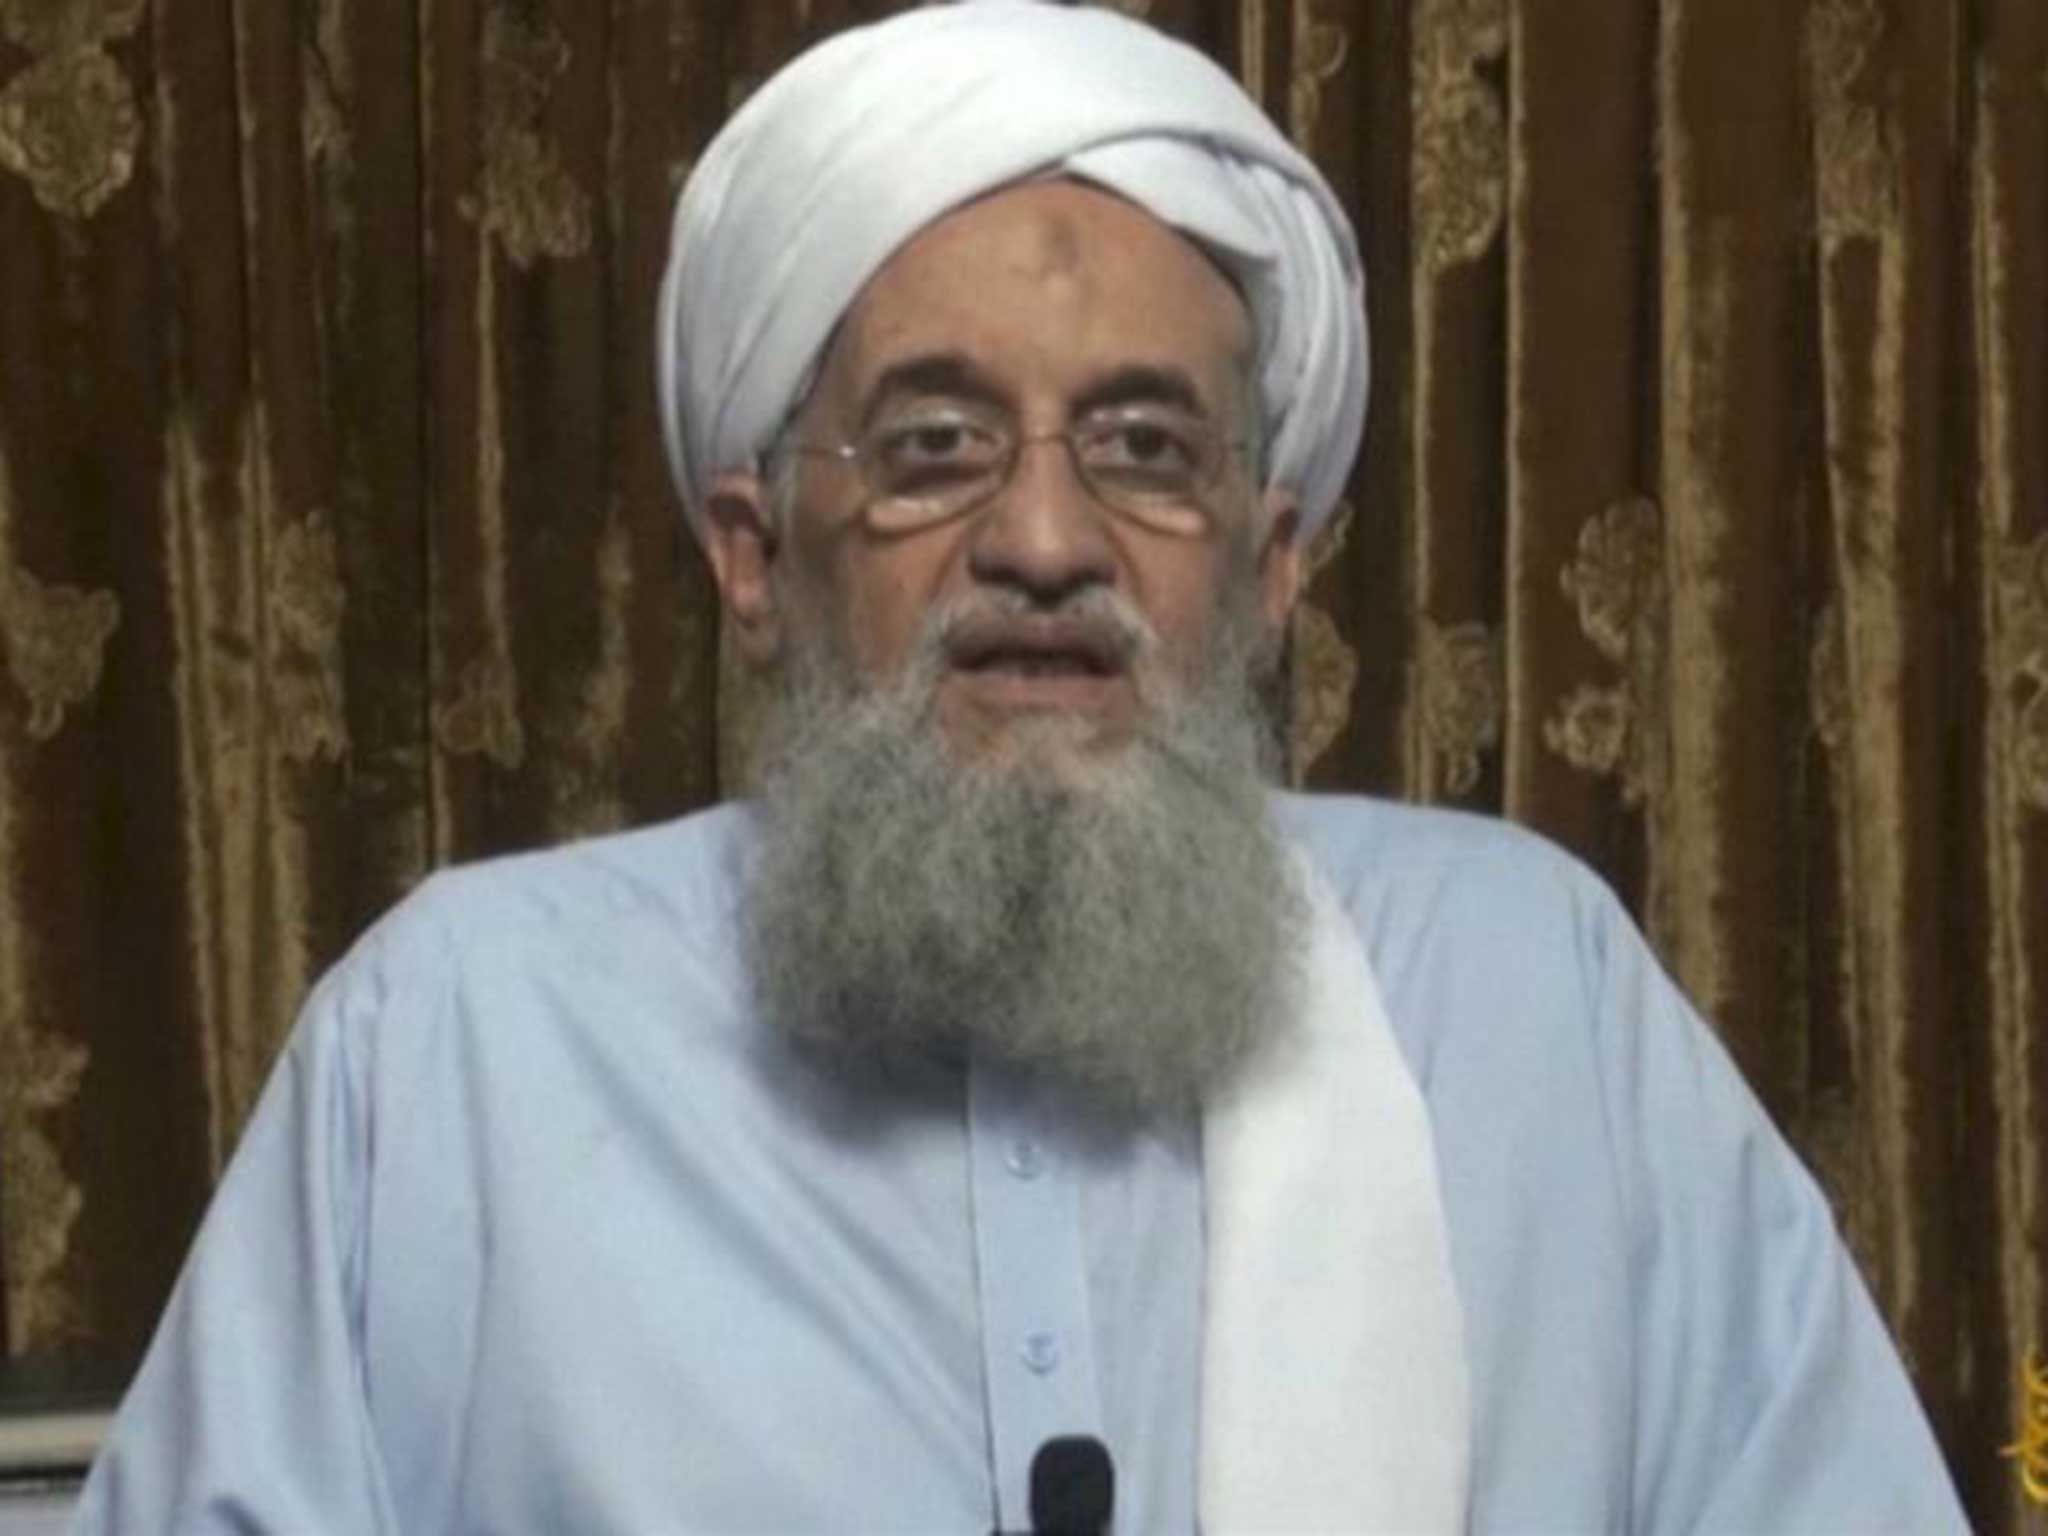 Ayman al-Zawahri, head of al-Qa'ida, delivers a statement in a video which was seen online